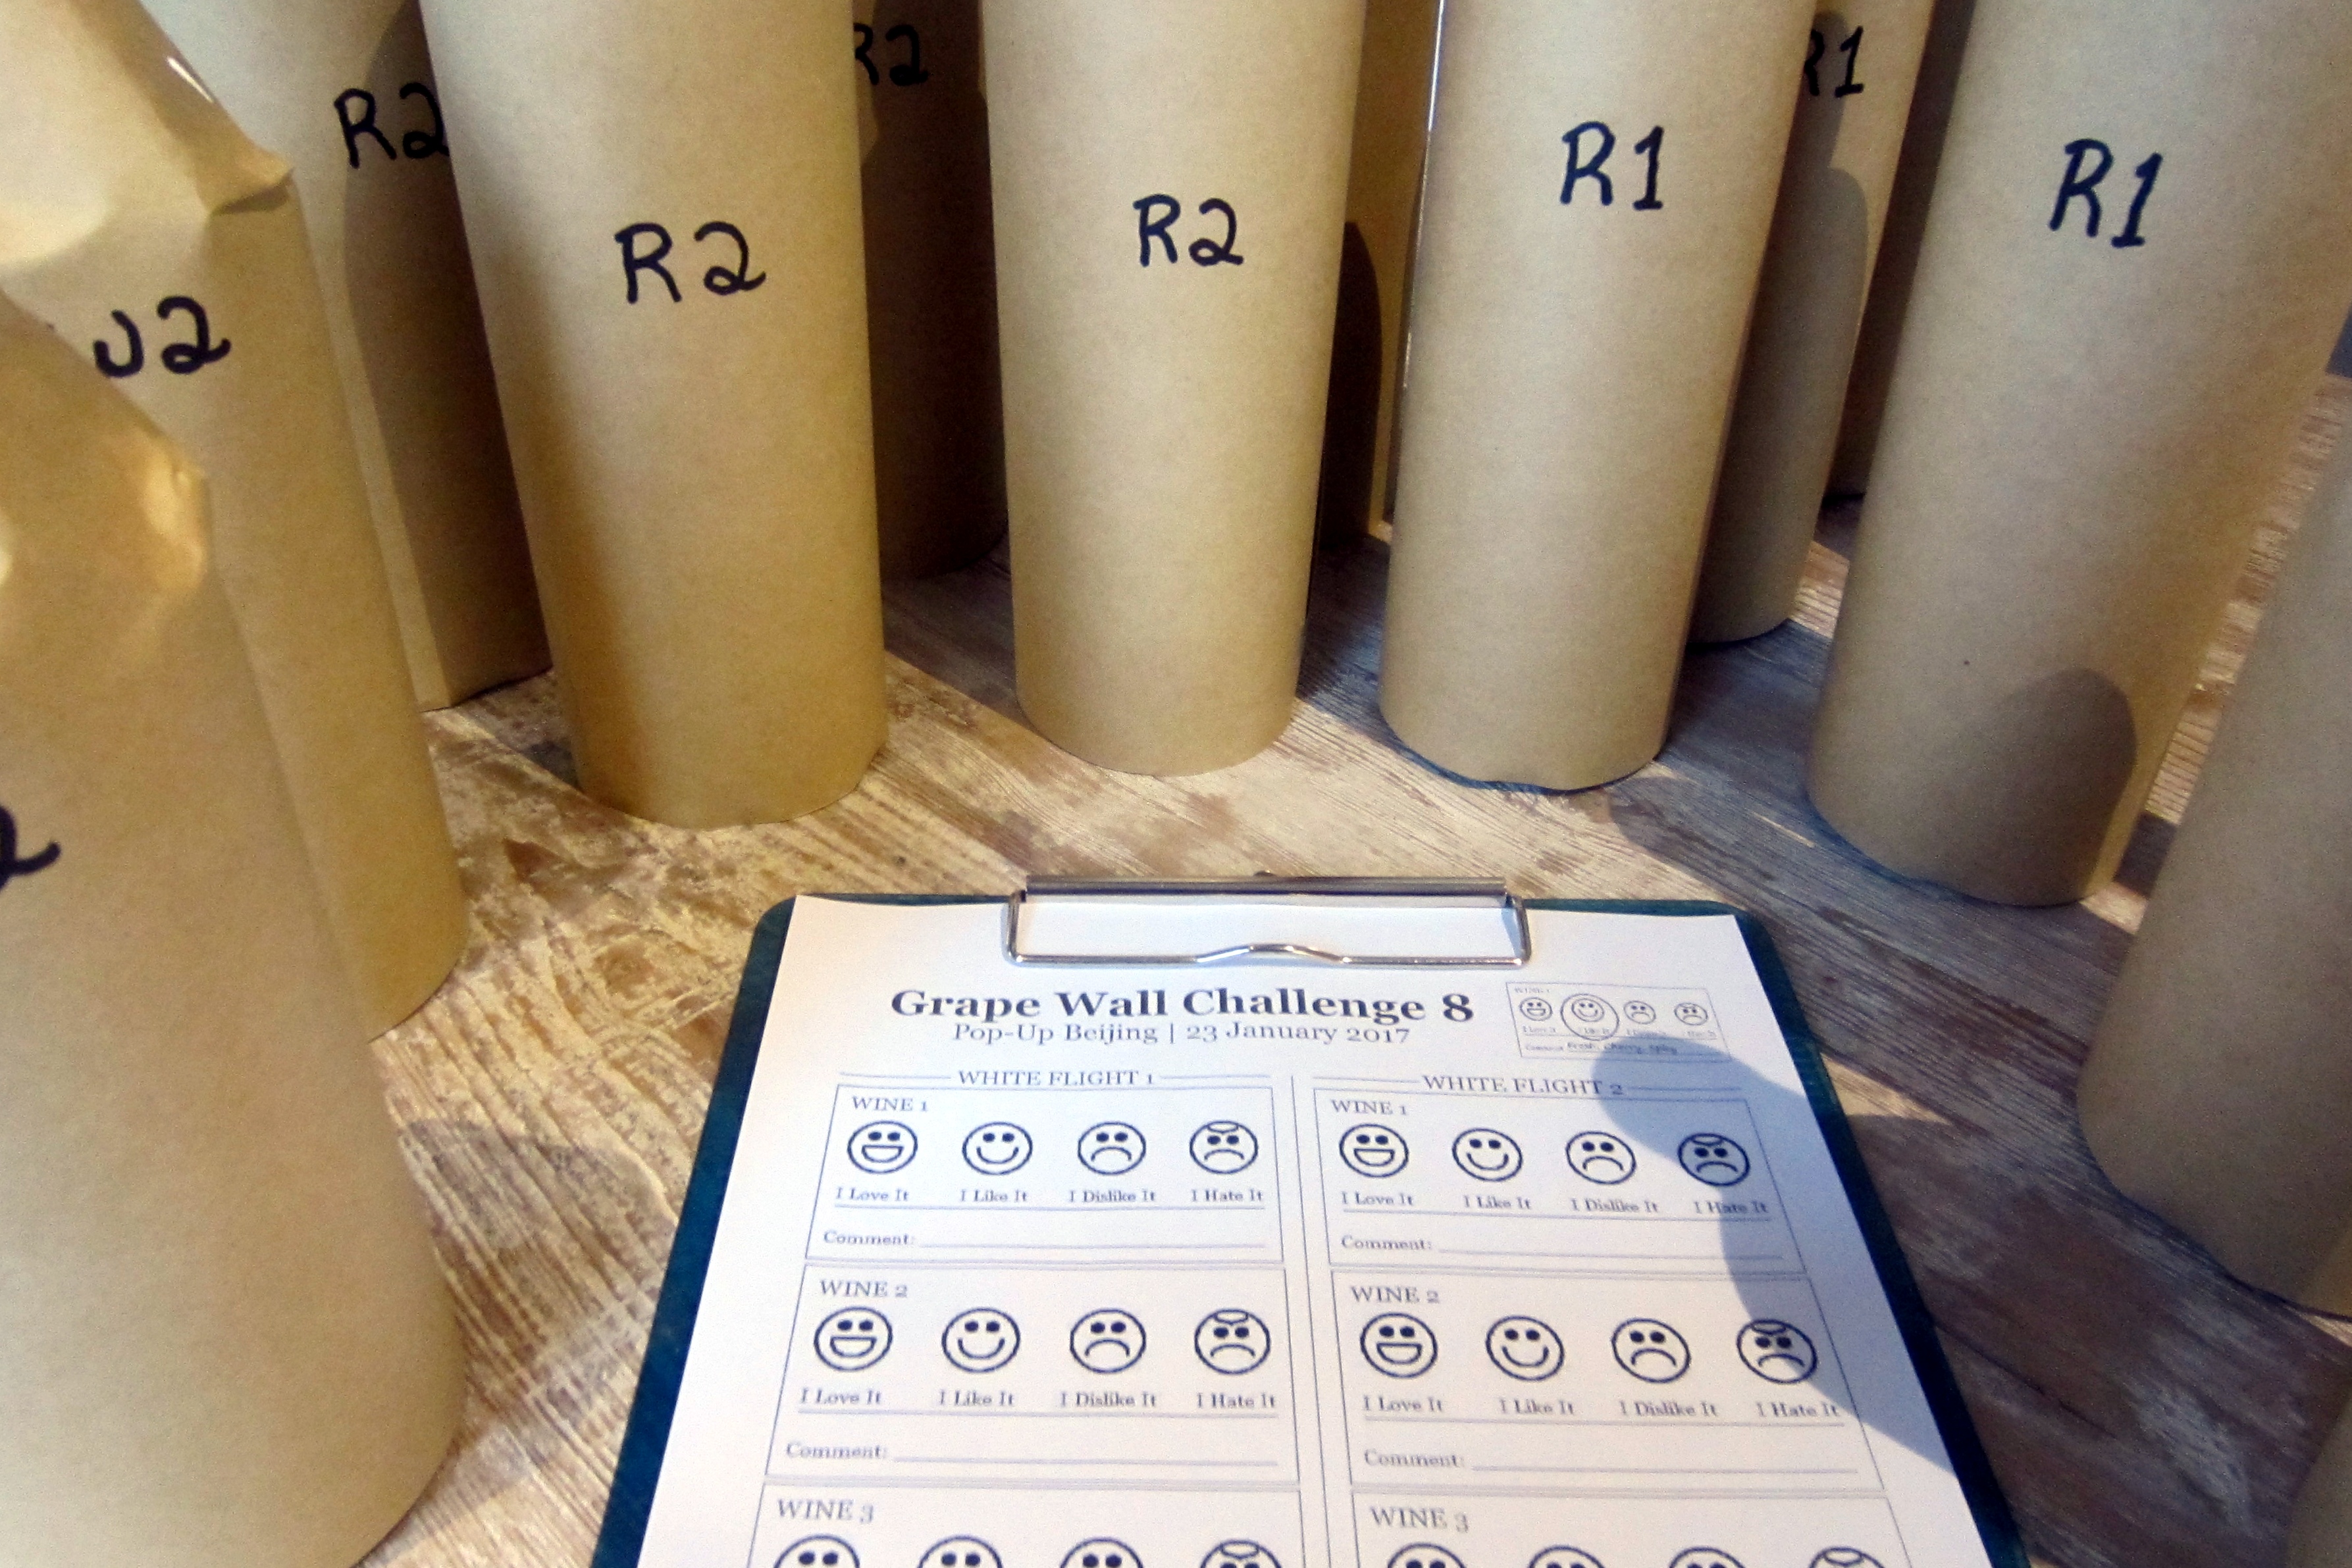 gwc grape wall challenge 8 at pop-up beijing (7)